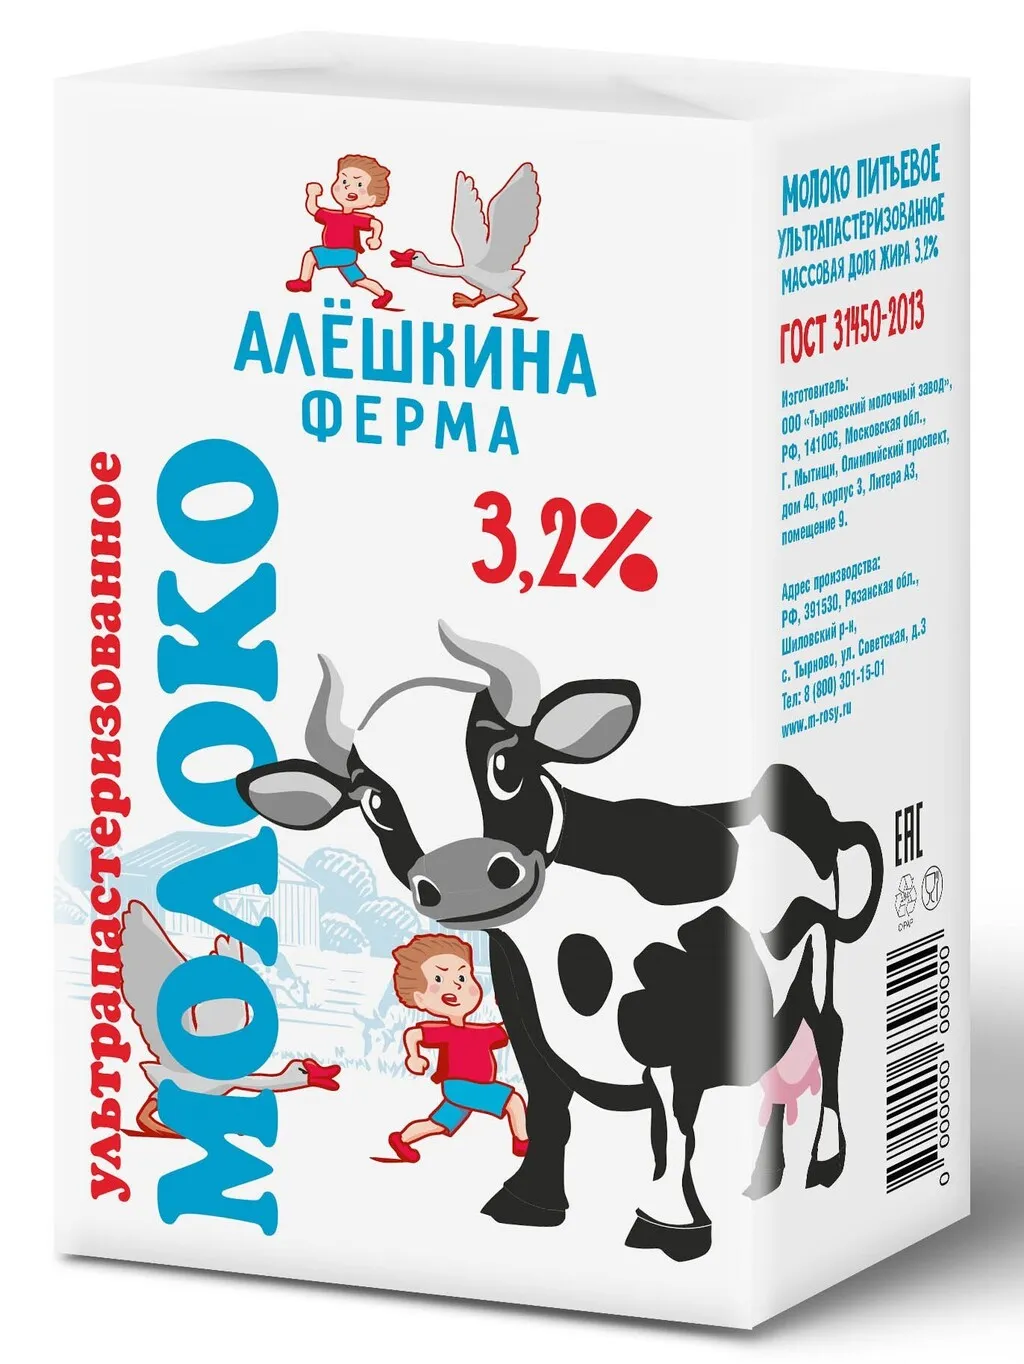 новинка! молоко у/пастеризов 3.2% 1 литр в Москве